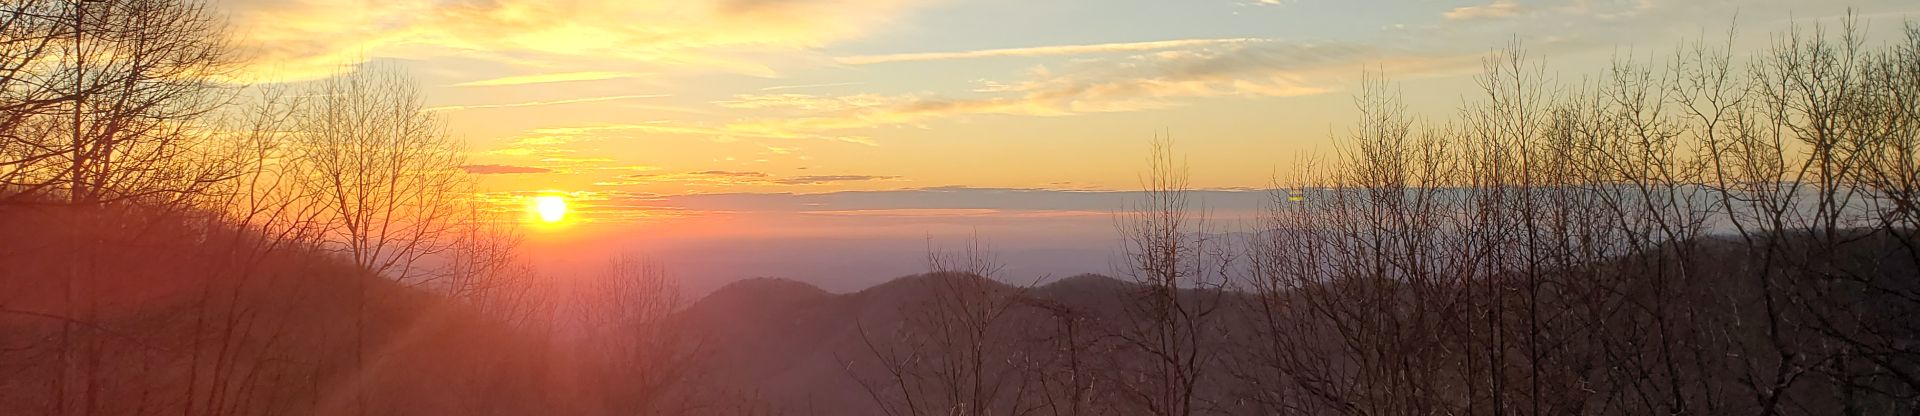 Mountain View Sunrise